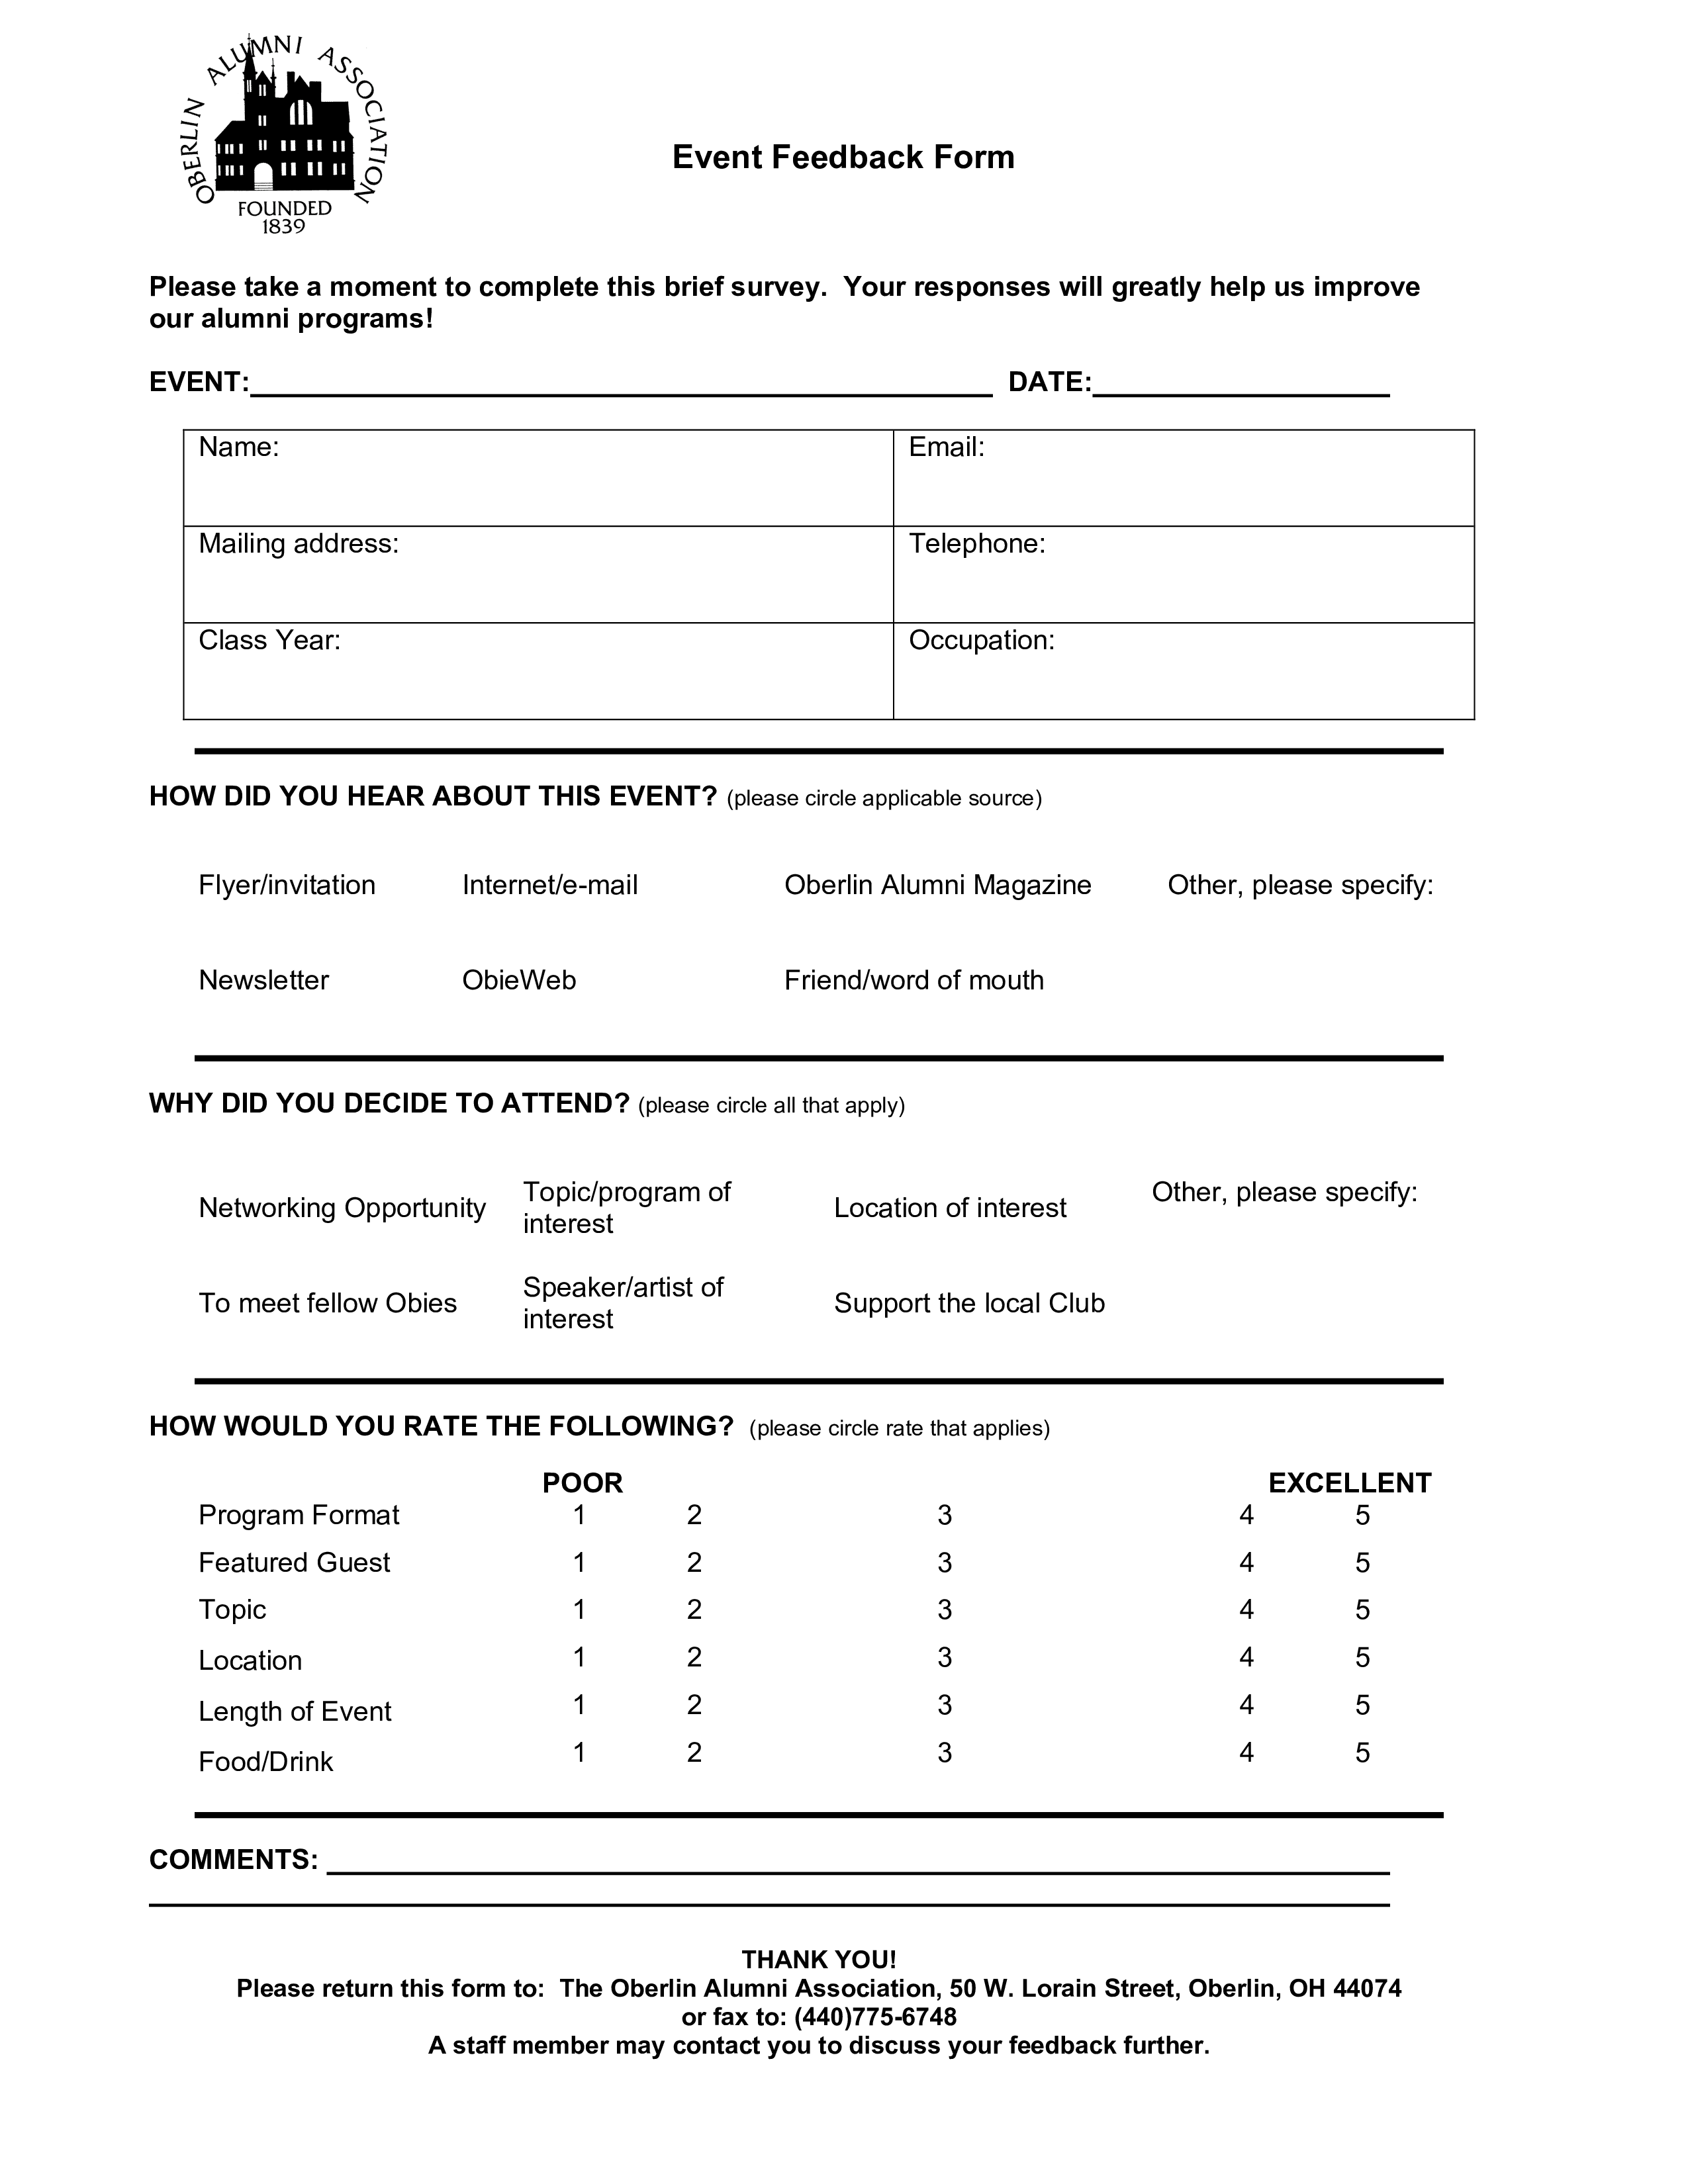 Oberlin Alumni Association event feedback form